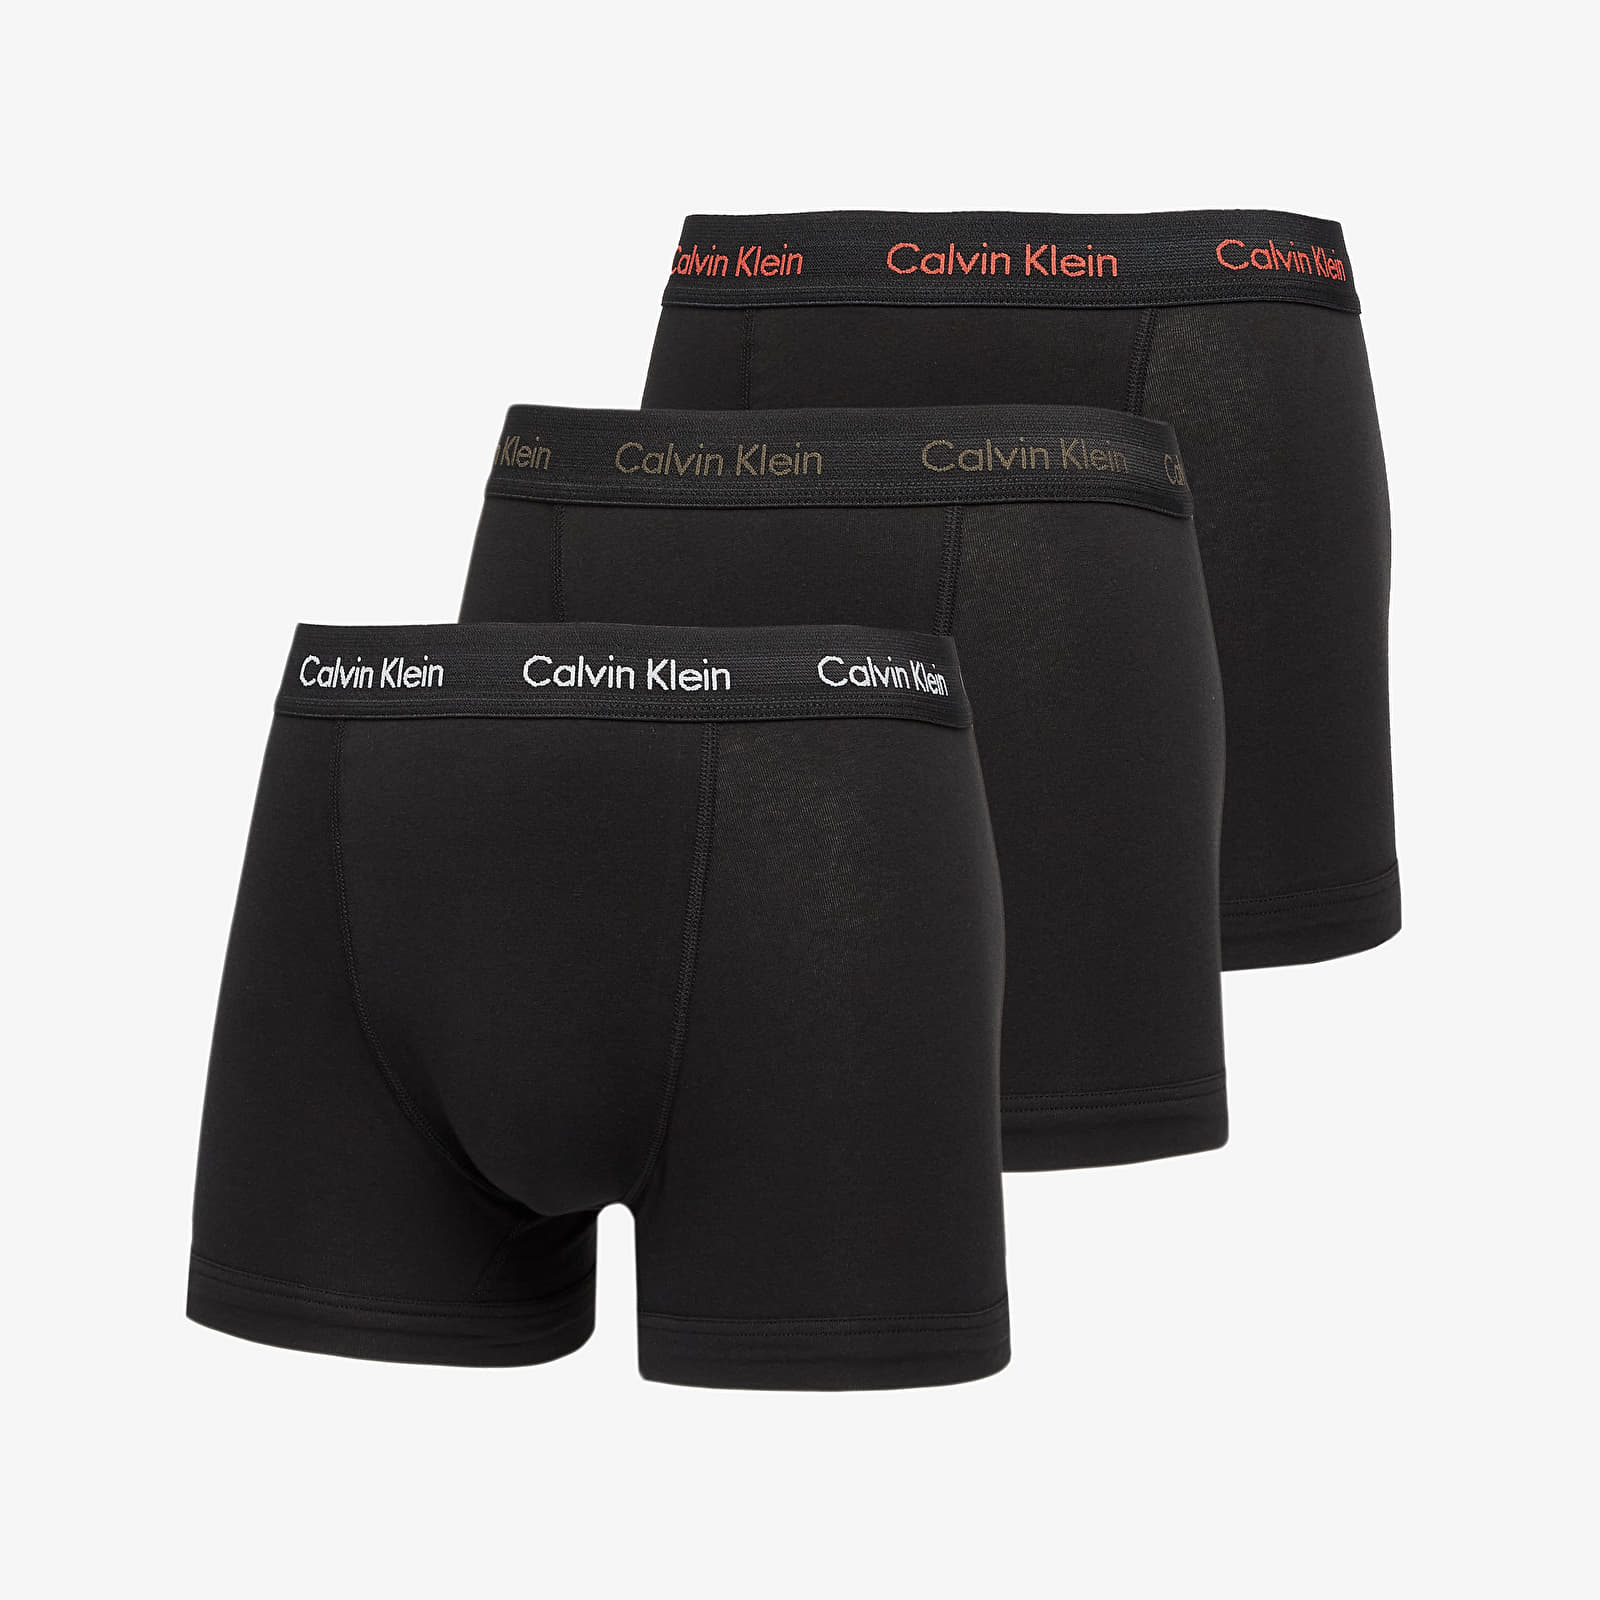 Boxershorts Calvin Klein Cotton Stretch Trunk 3 Pack Black